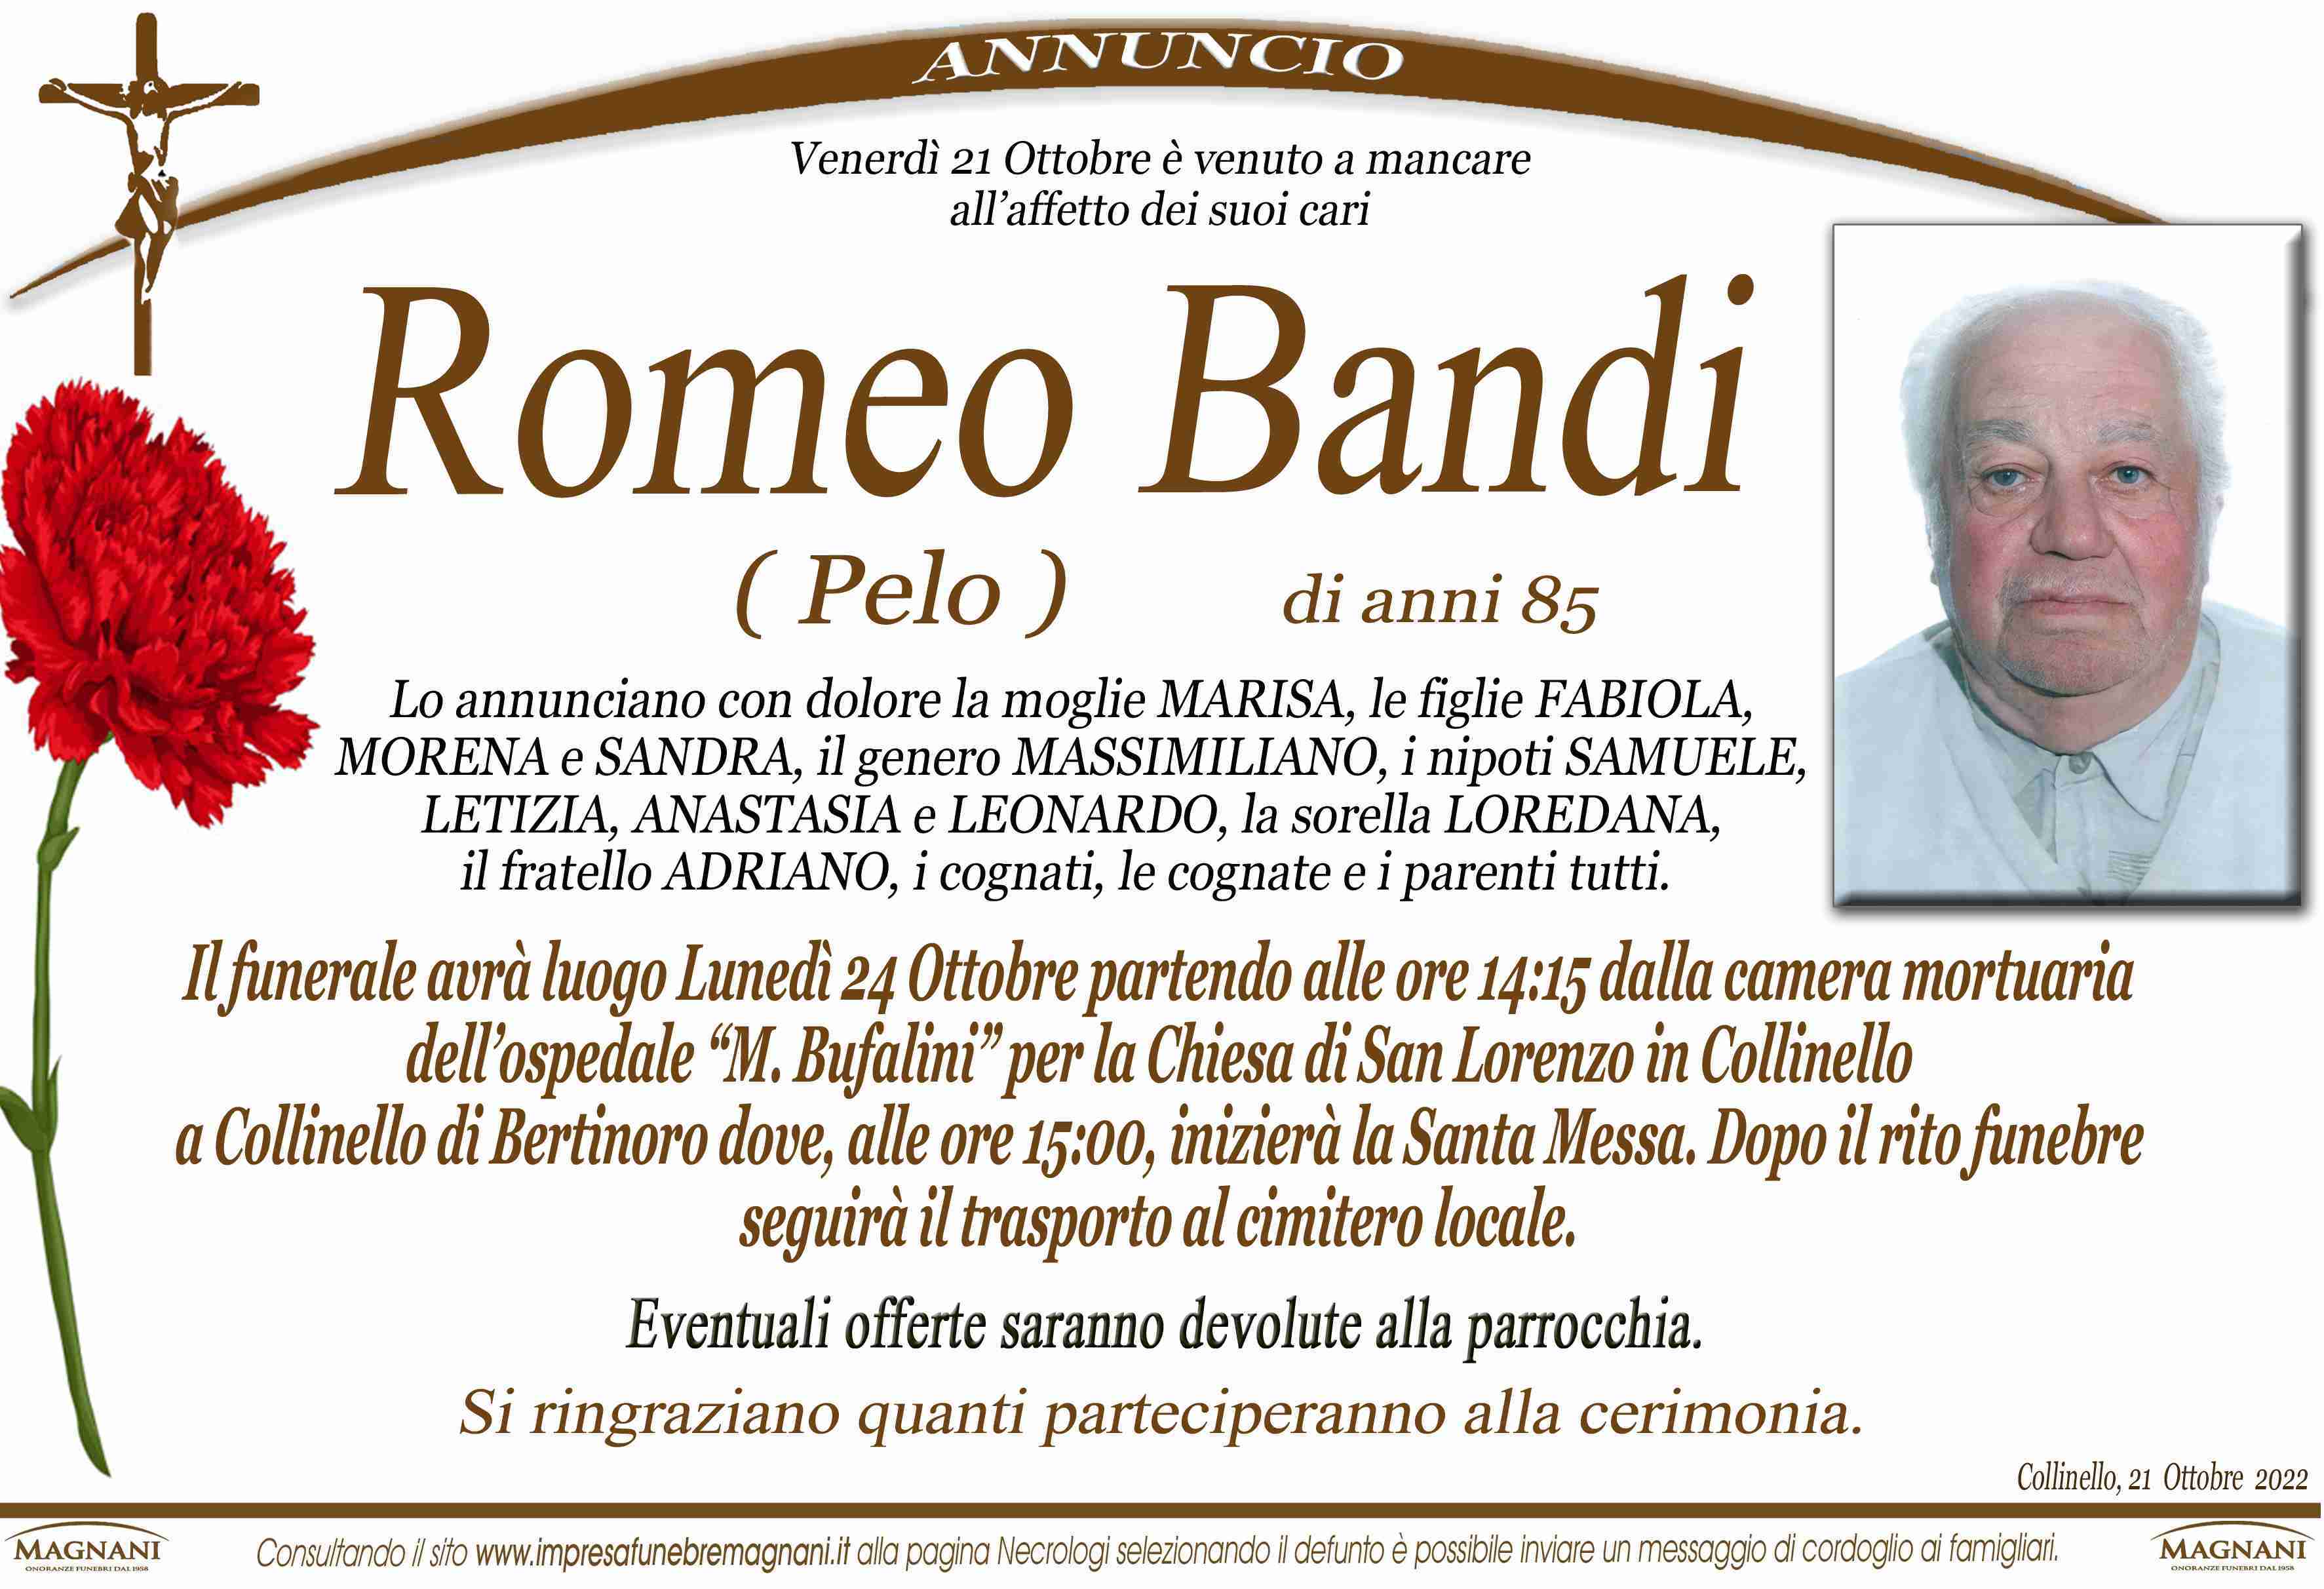 Romeo Bandi